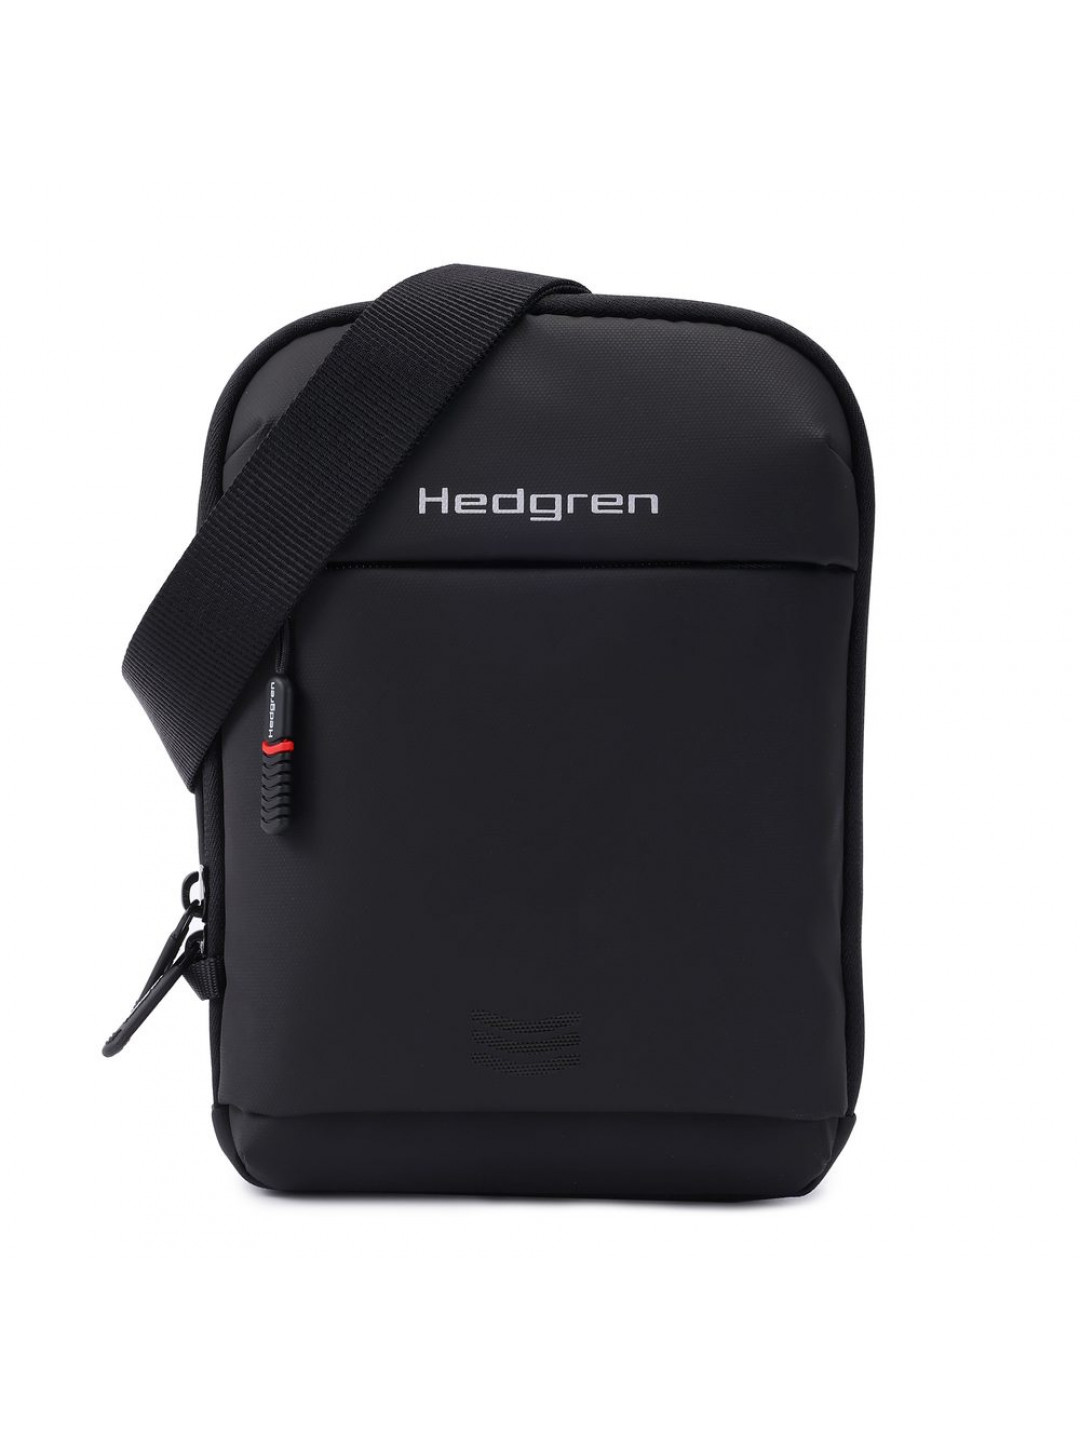 Hedgren Crossbody taška Turn HCOM08 – černá